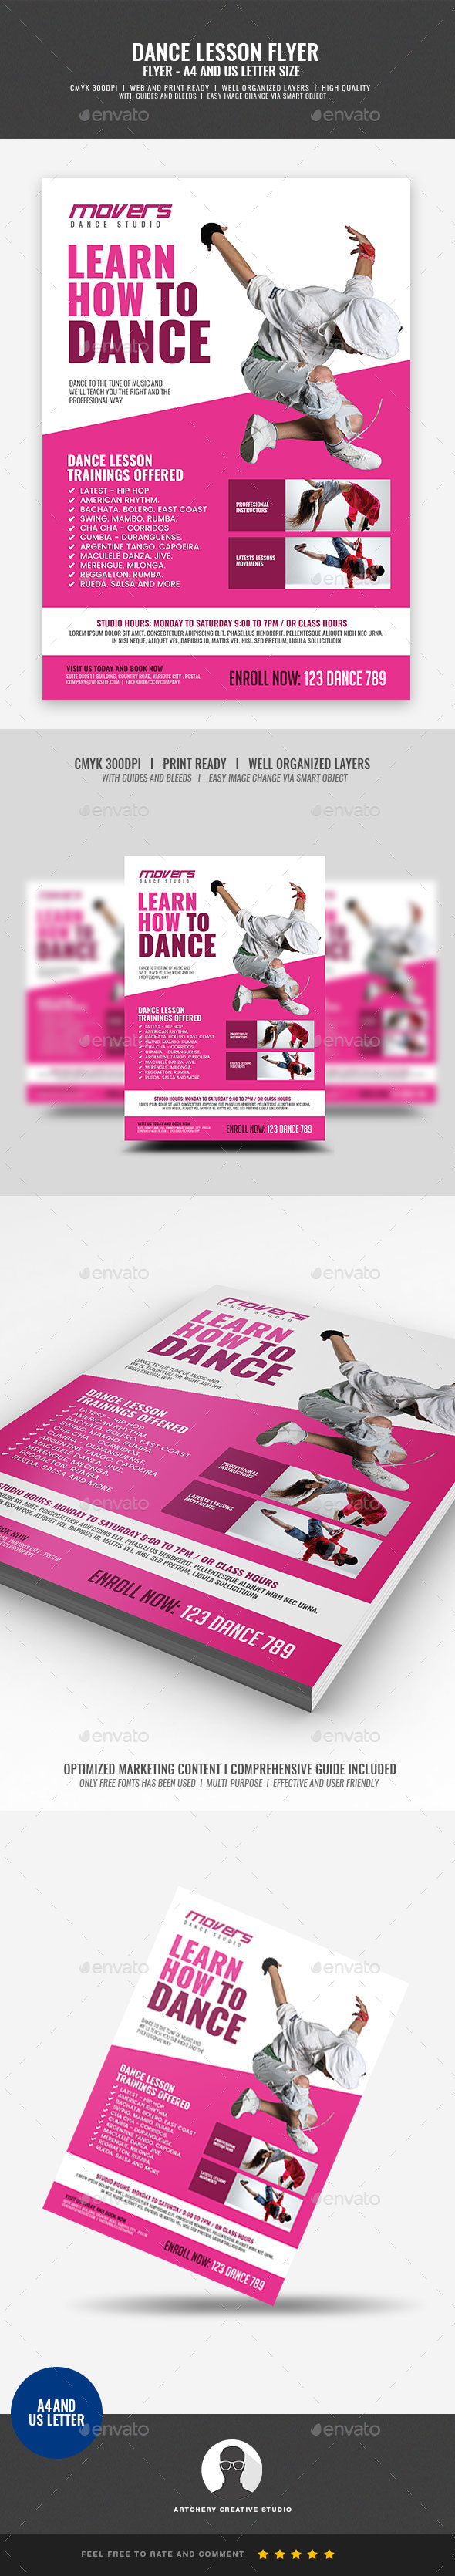 Dance Class Flyer Template from previews.customer.envatousercontent.com